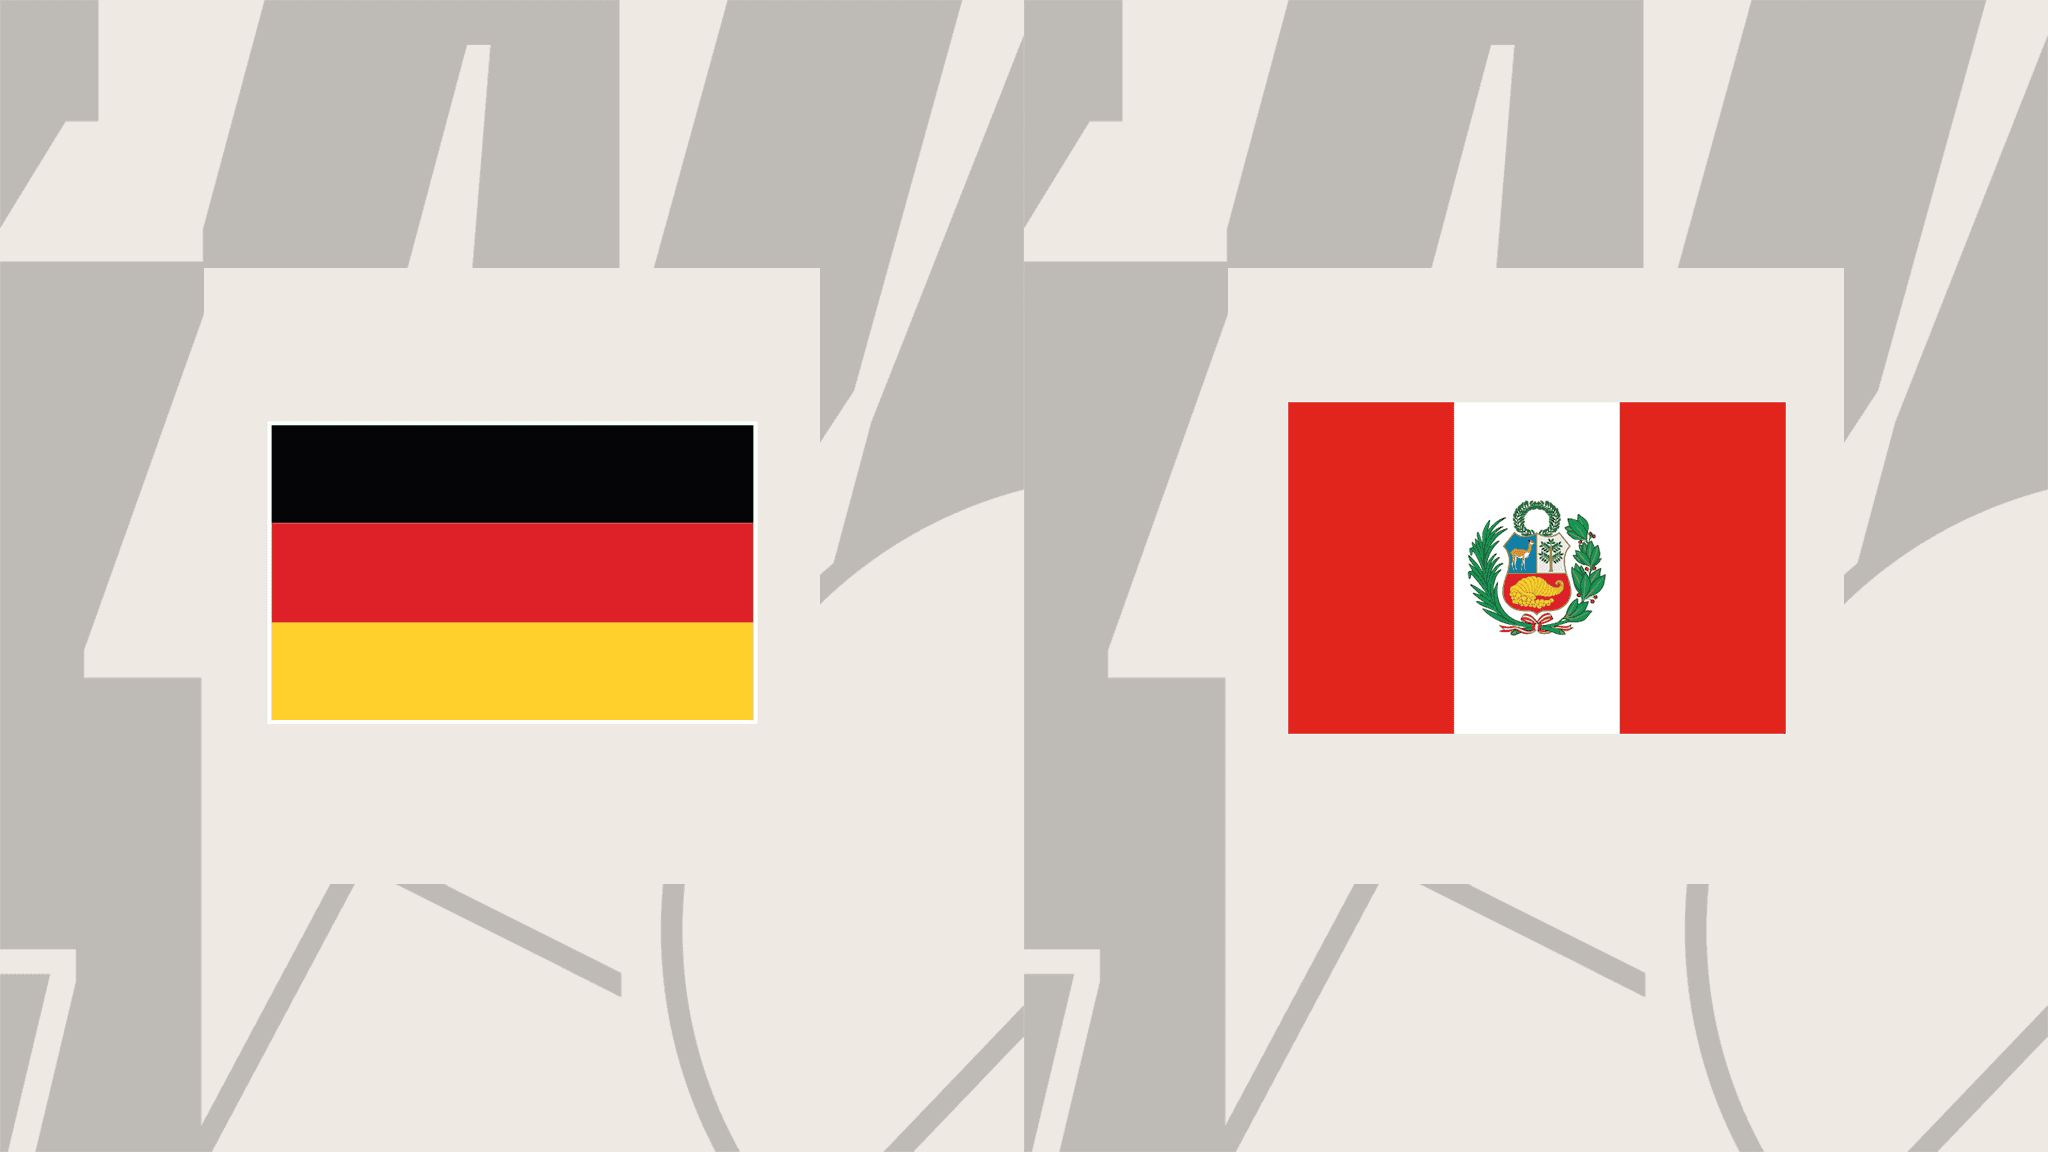  WORLD: INTERNATIONAL FRIENDLIES Germany vs Peru Live Score and Live Stream